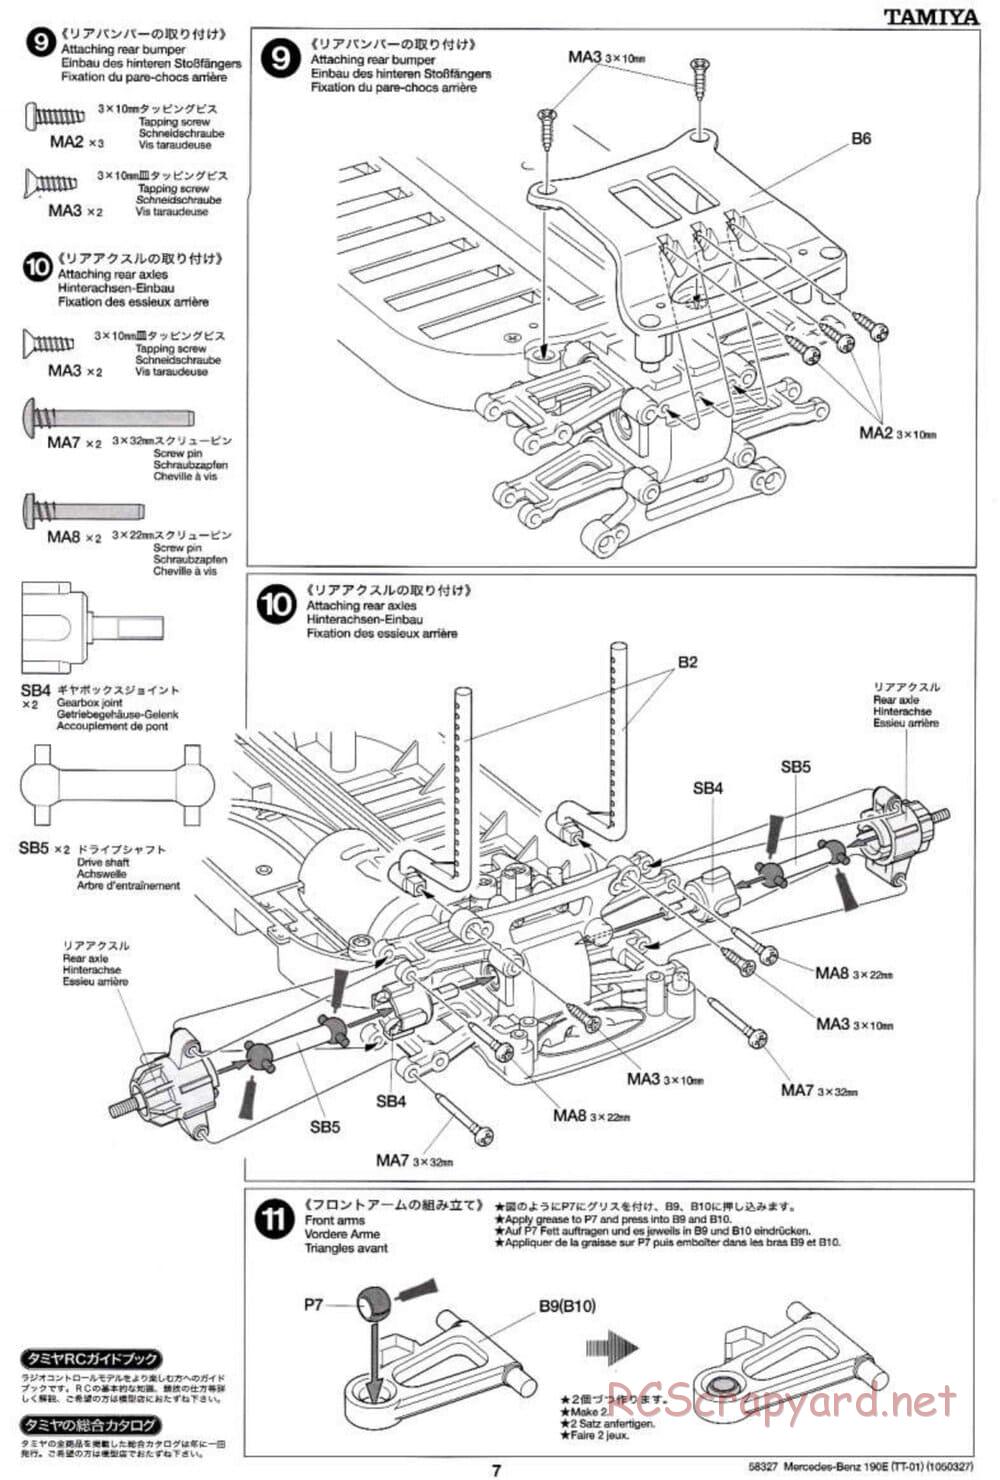 Tamiya - Mercedes Benz 190E Evo.II AMG - TT-01 Chassis - Manual - Page 7